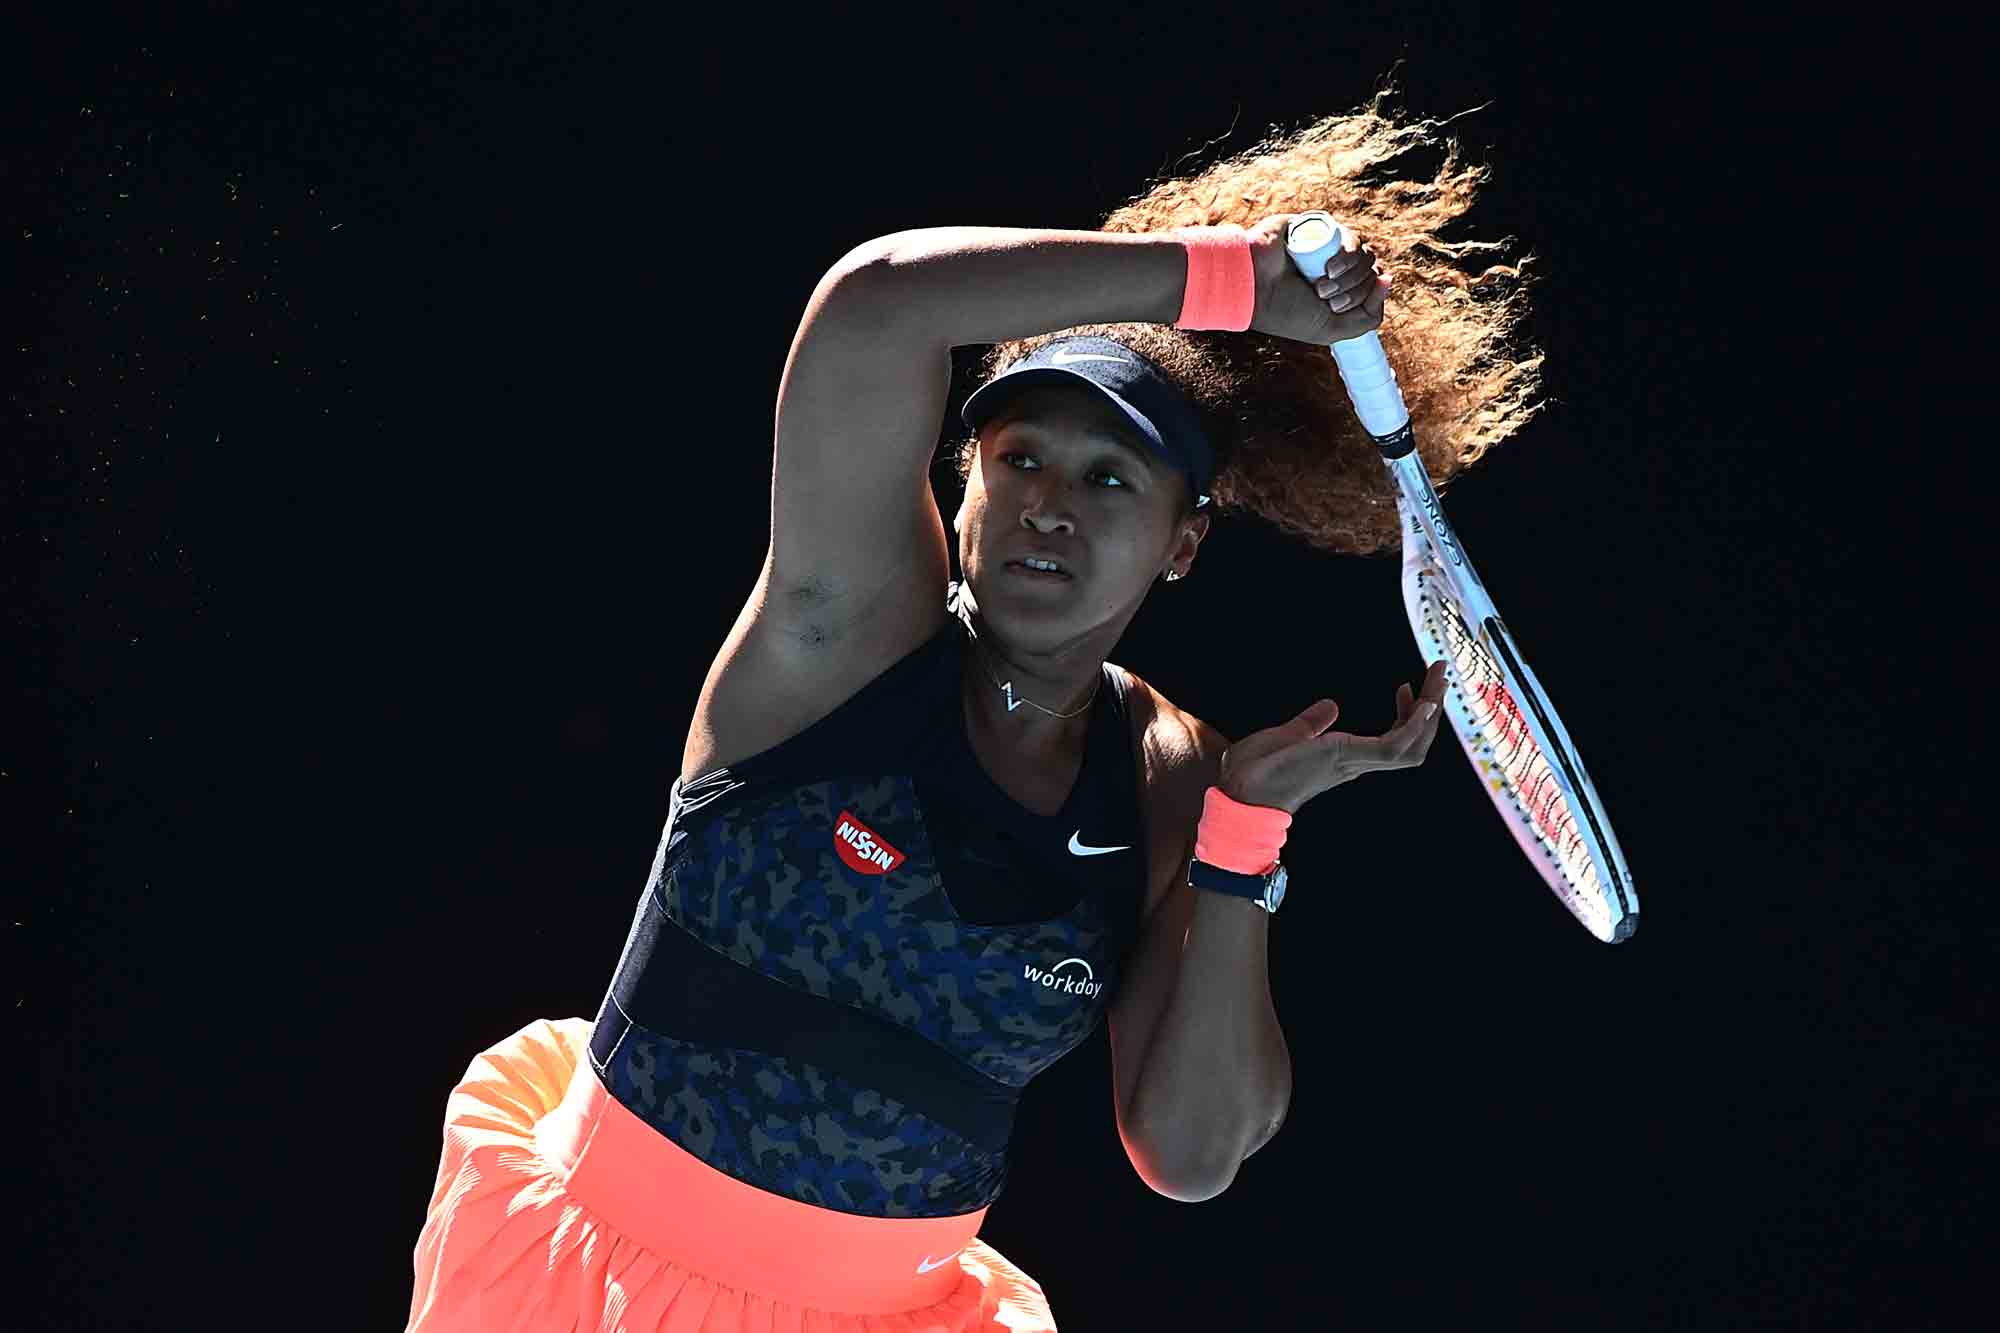 Serena stopped: Naomi Osaka beats Williams in Australian Open semifinals